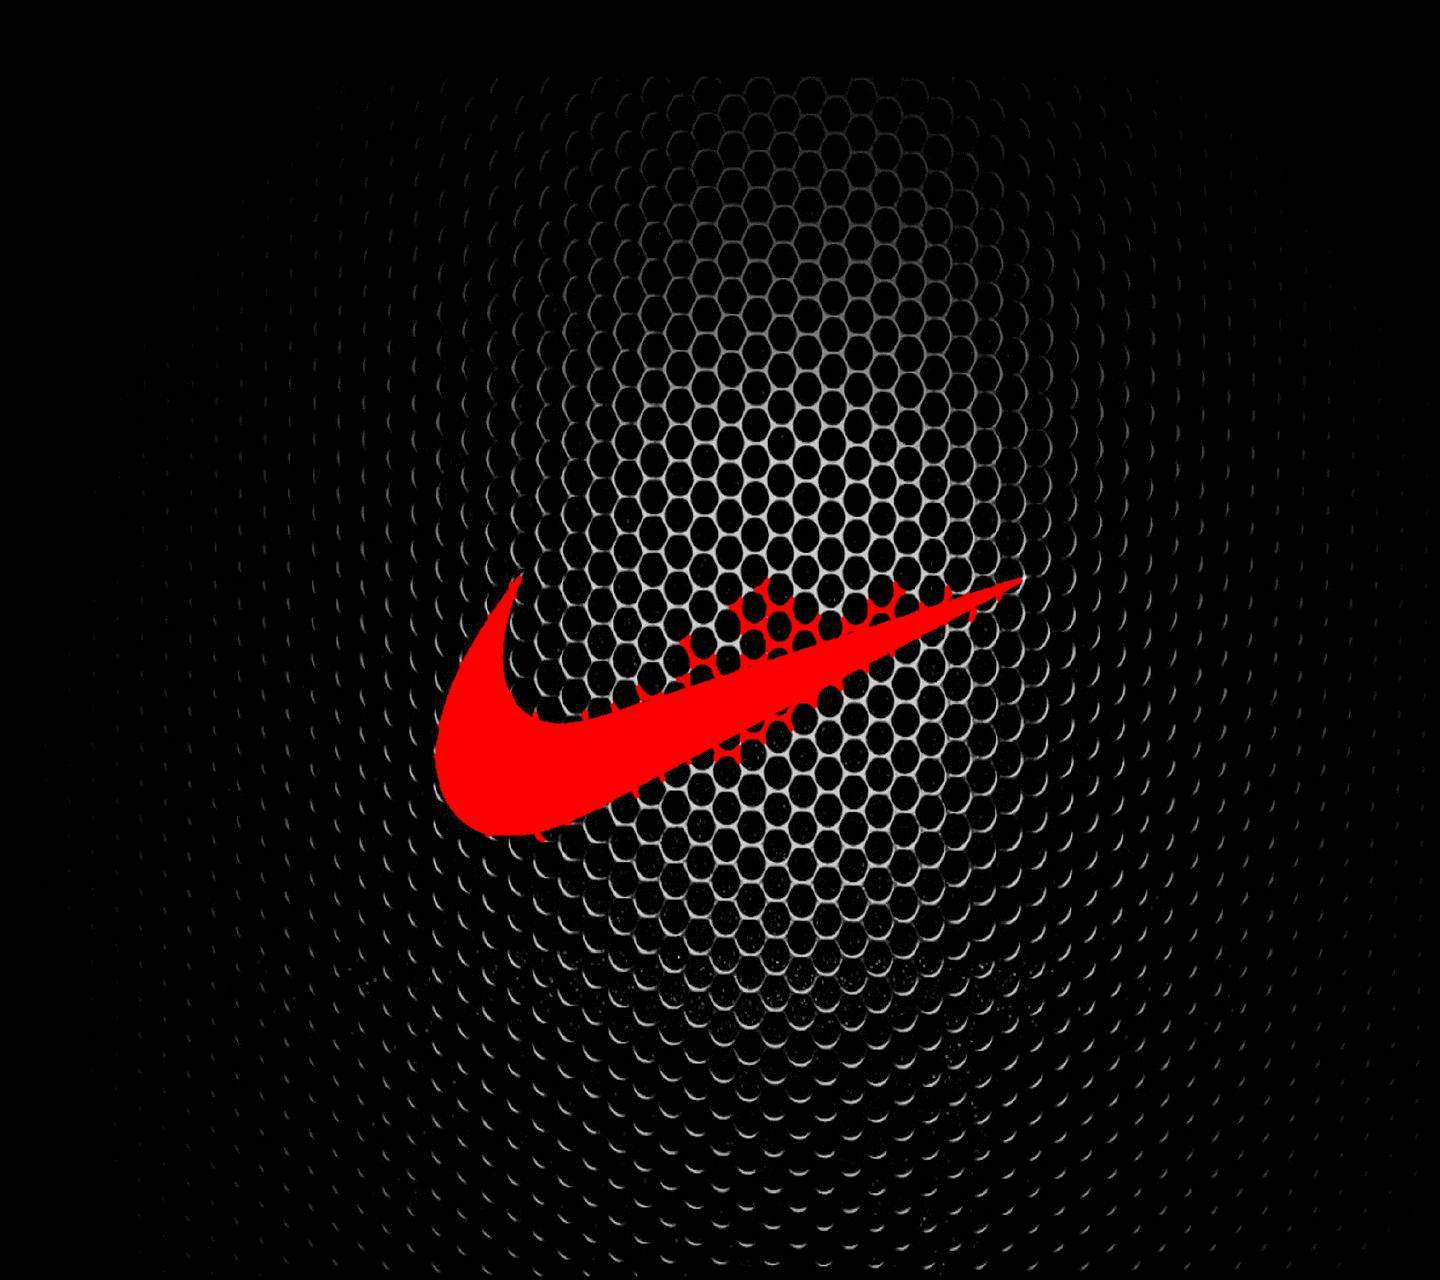 Ткань найка. Nike logo Red. Красные обои найк. Найк на Красном фоне. Красный найк на черном фоне.